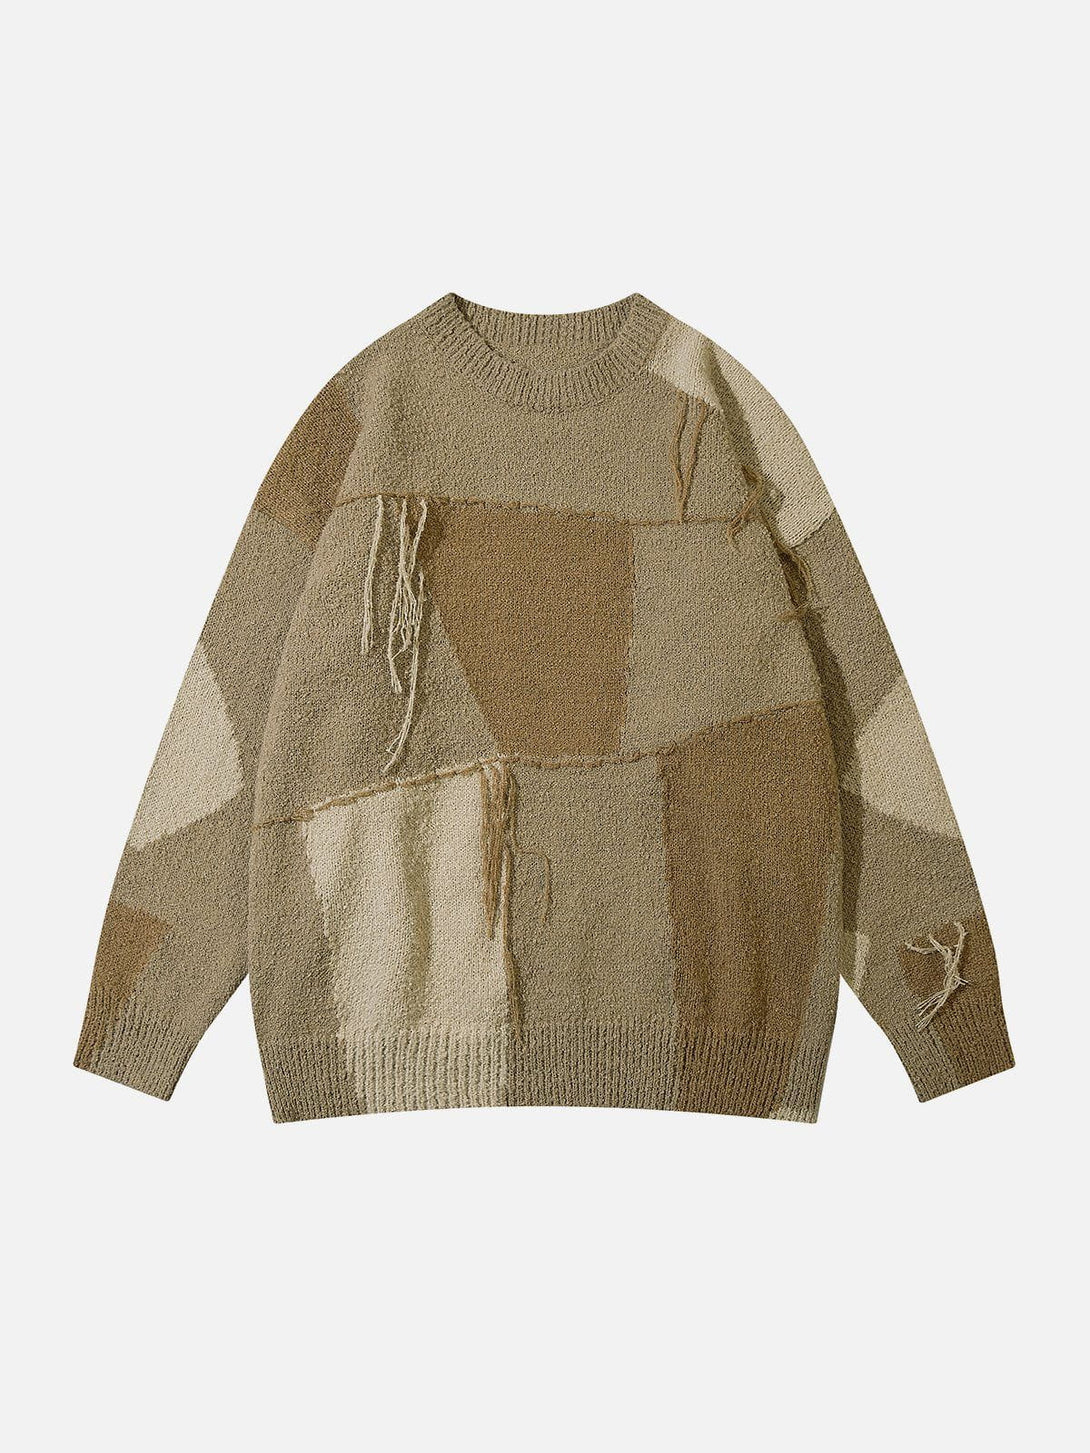 Majesda® - Irregular Colorblock Fringe Sweater outfit ideas streetwear fashion